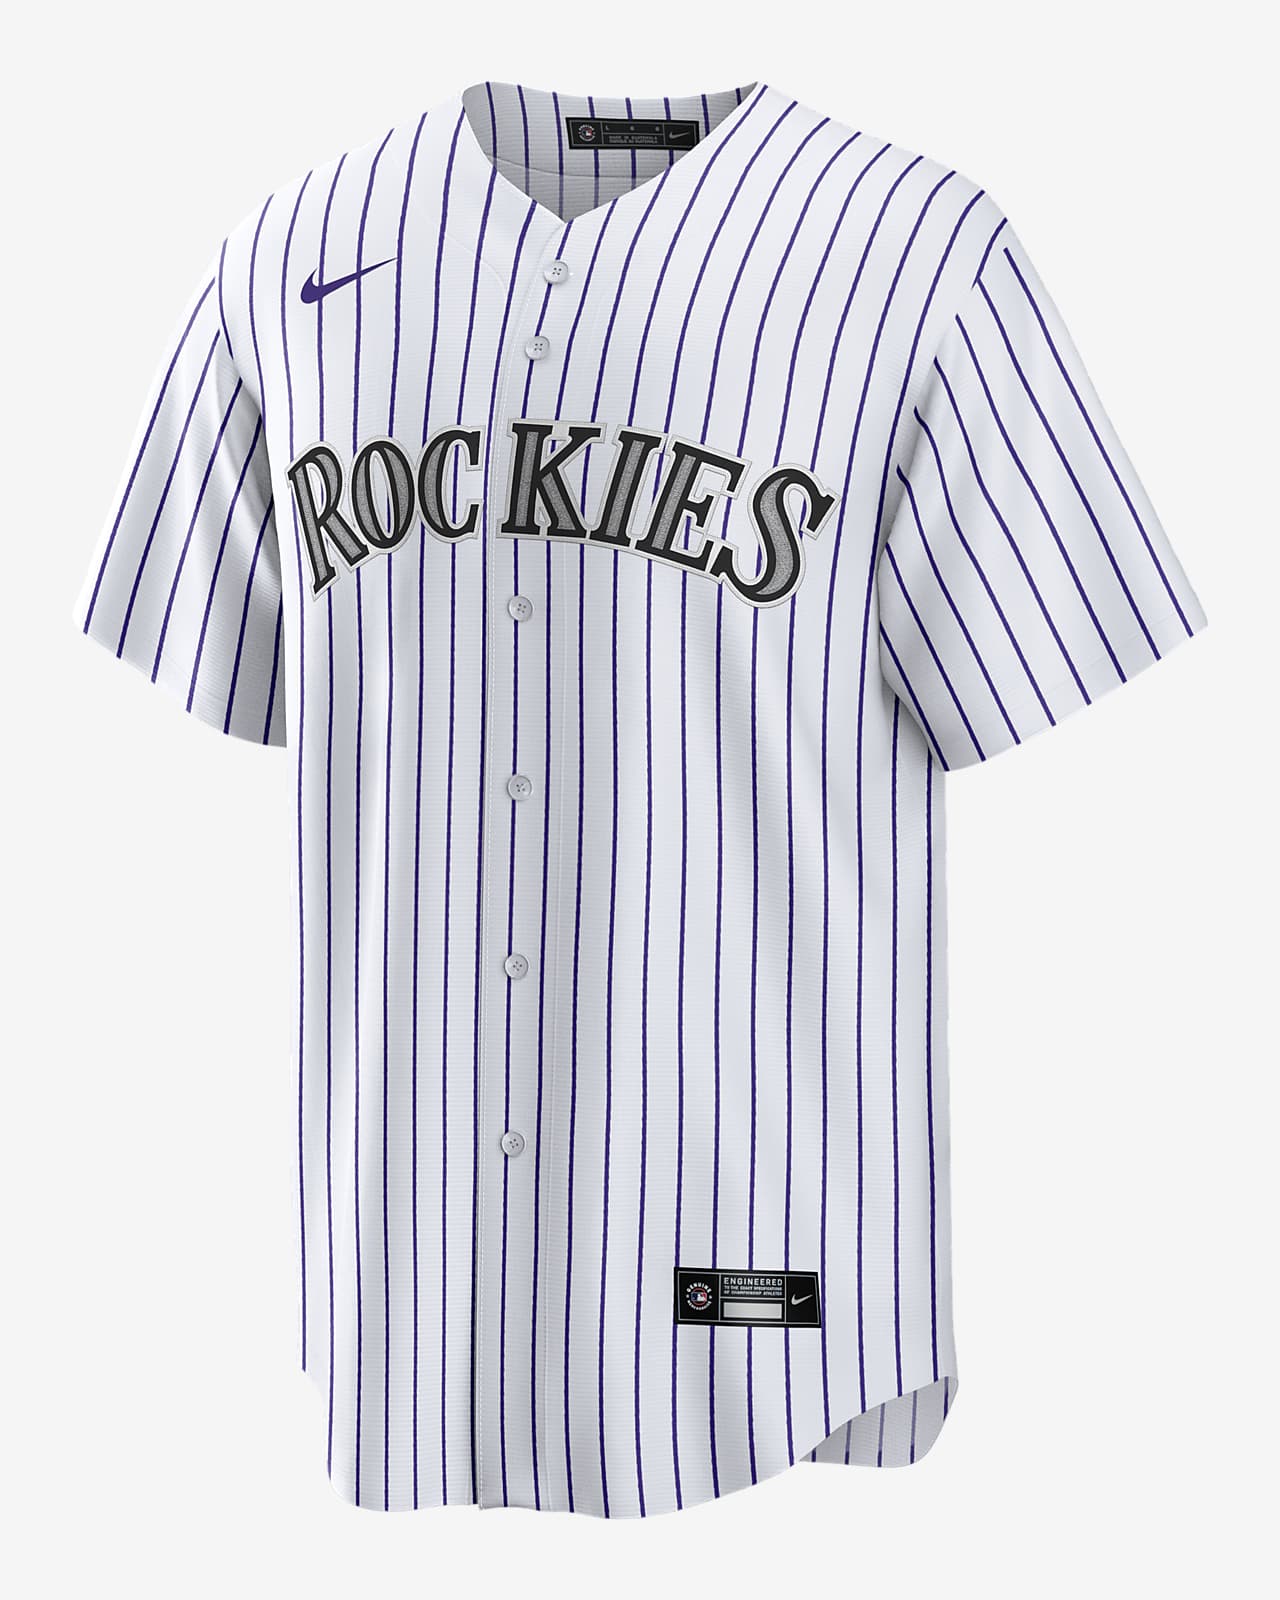 colorado rockies baseball jersey